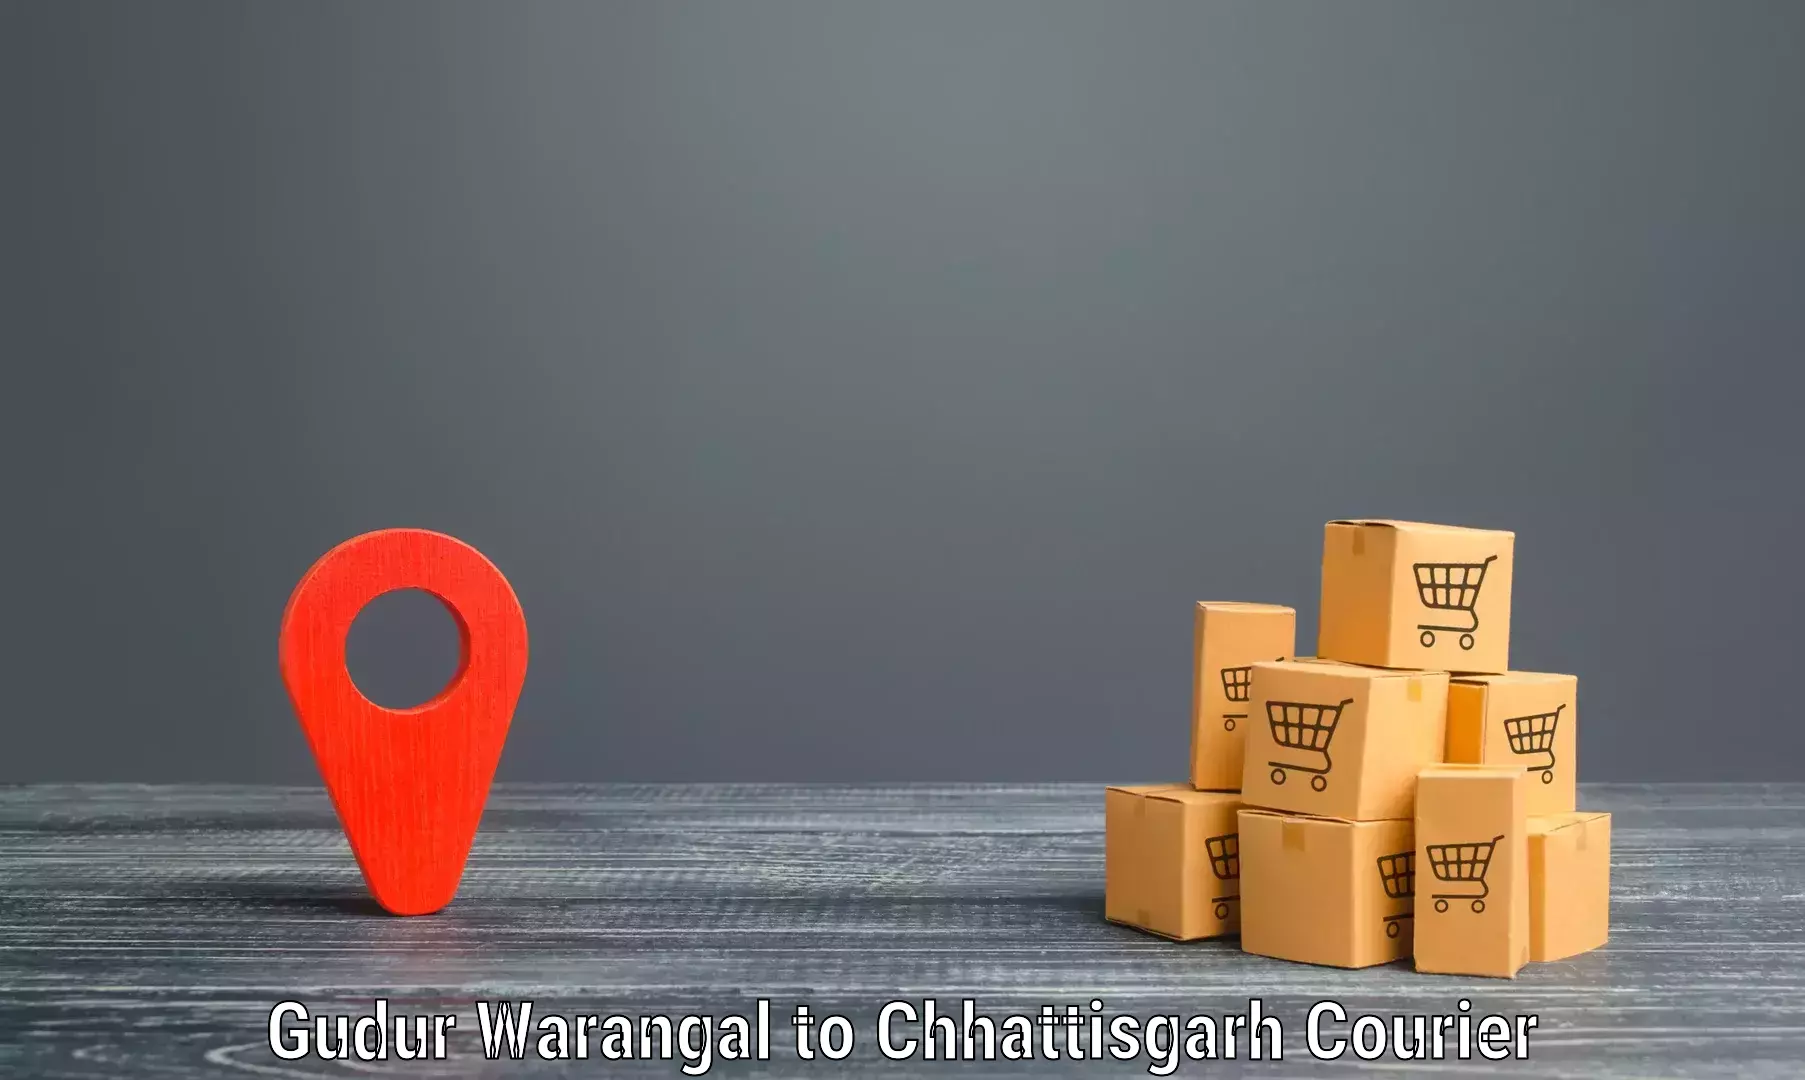 Courier service comparison Gudur Warangal to Raigarh